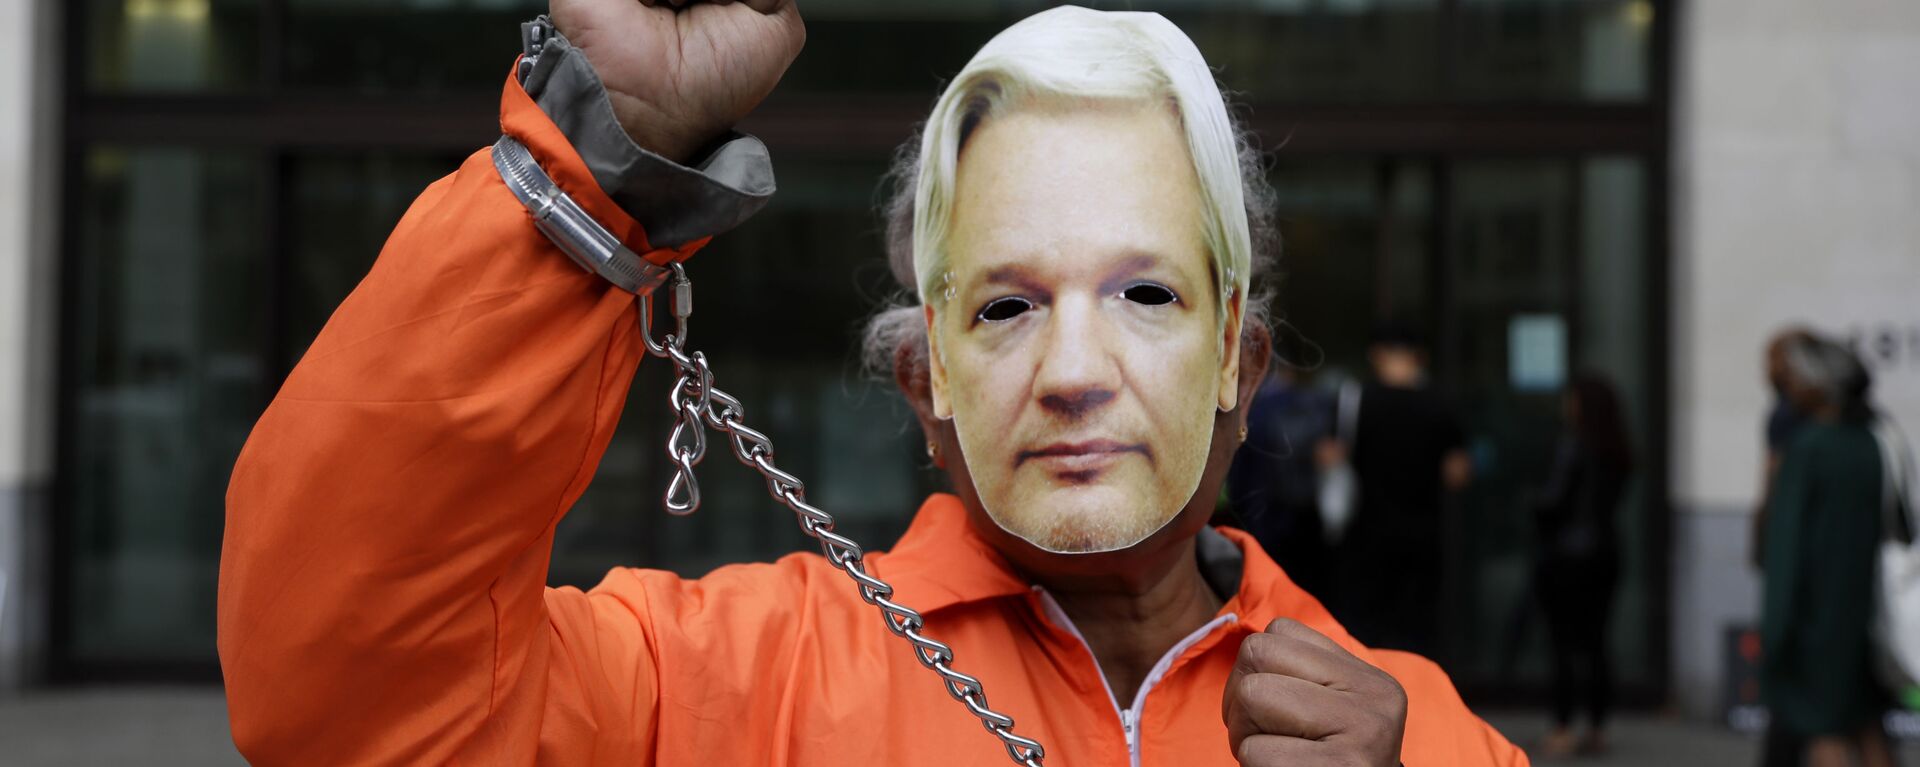 Un manifestante por la liberación del fundador de Wikileaks, Julian Assange - Sputnik Mundo, 1920, 03.06.2021